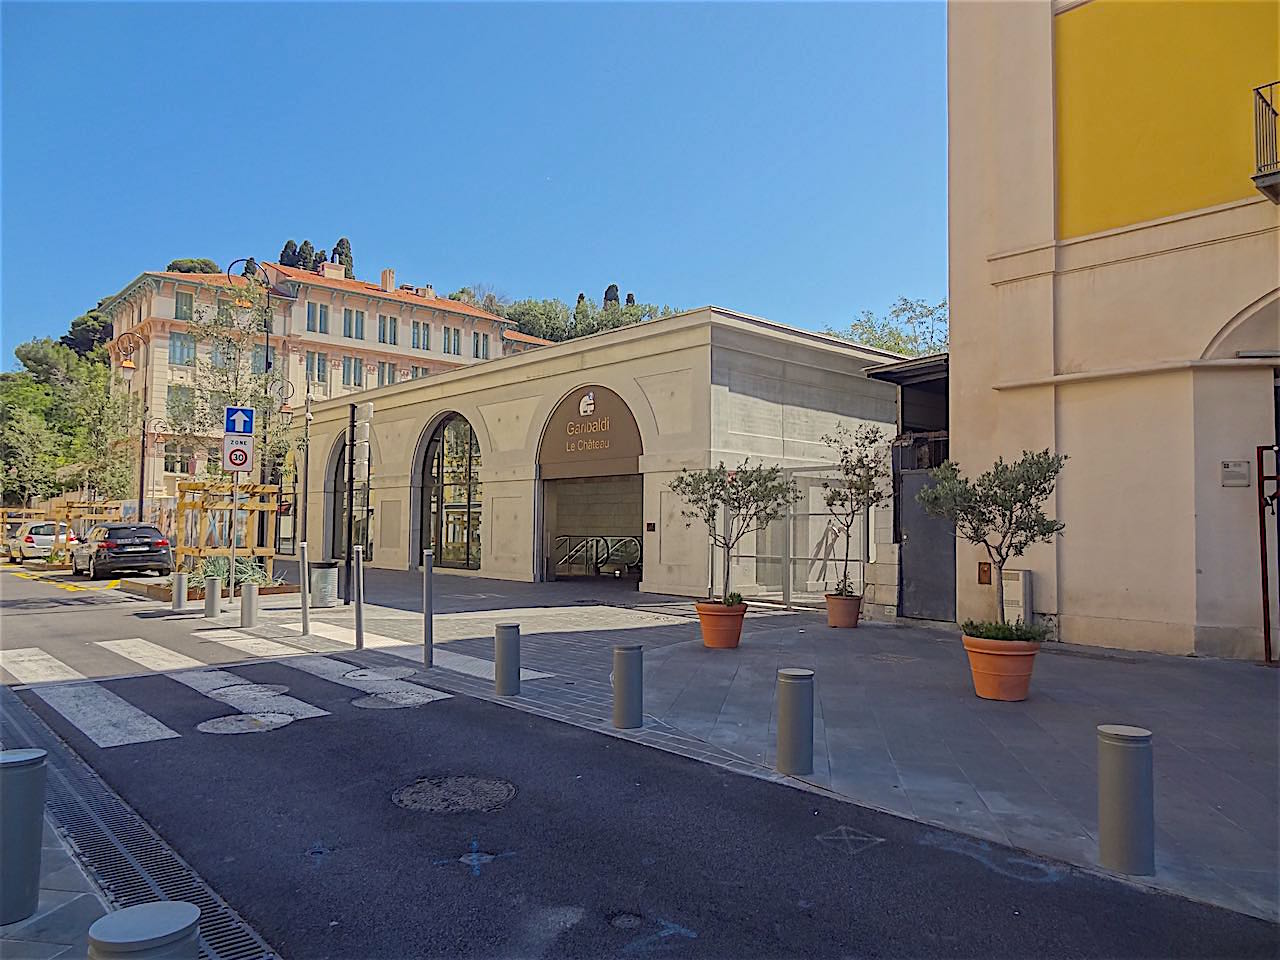 Accès au tramway souterrain, place Garibaldi à Nice